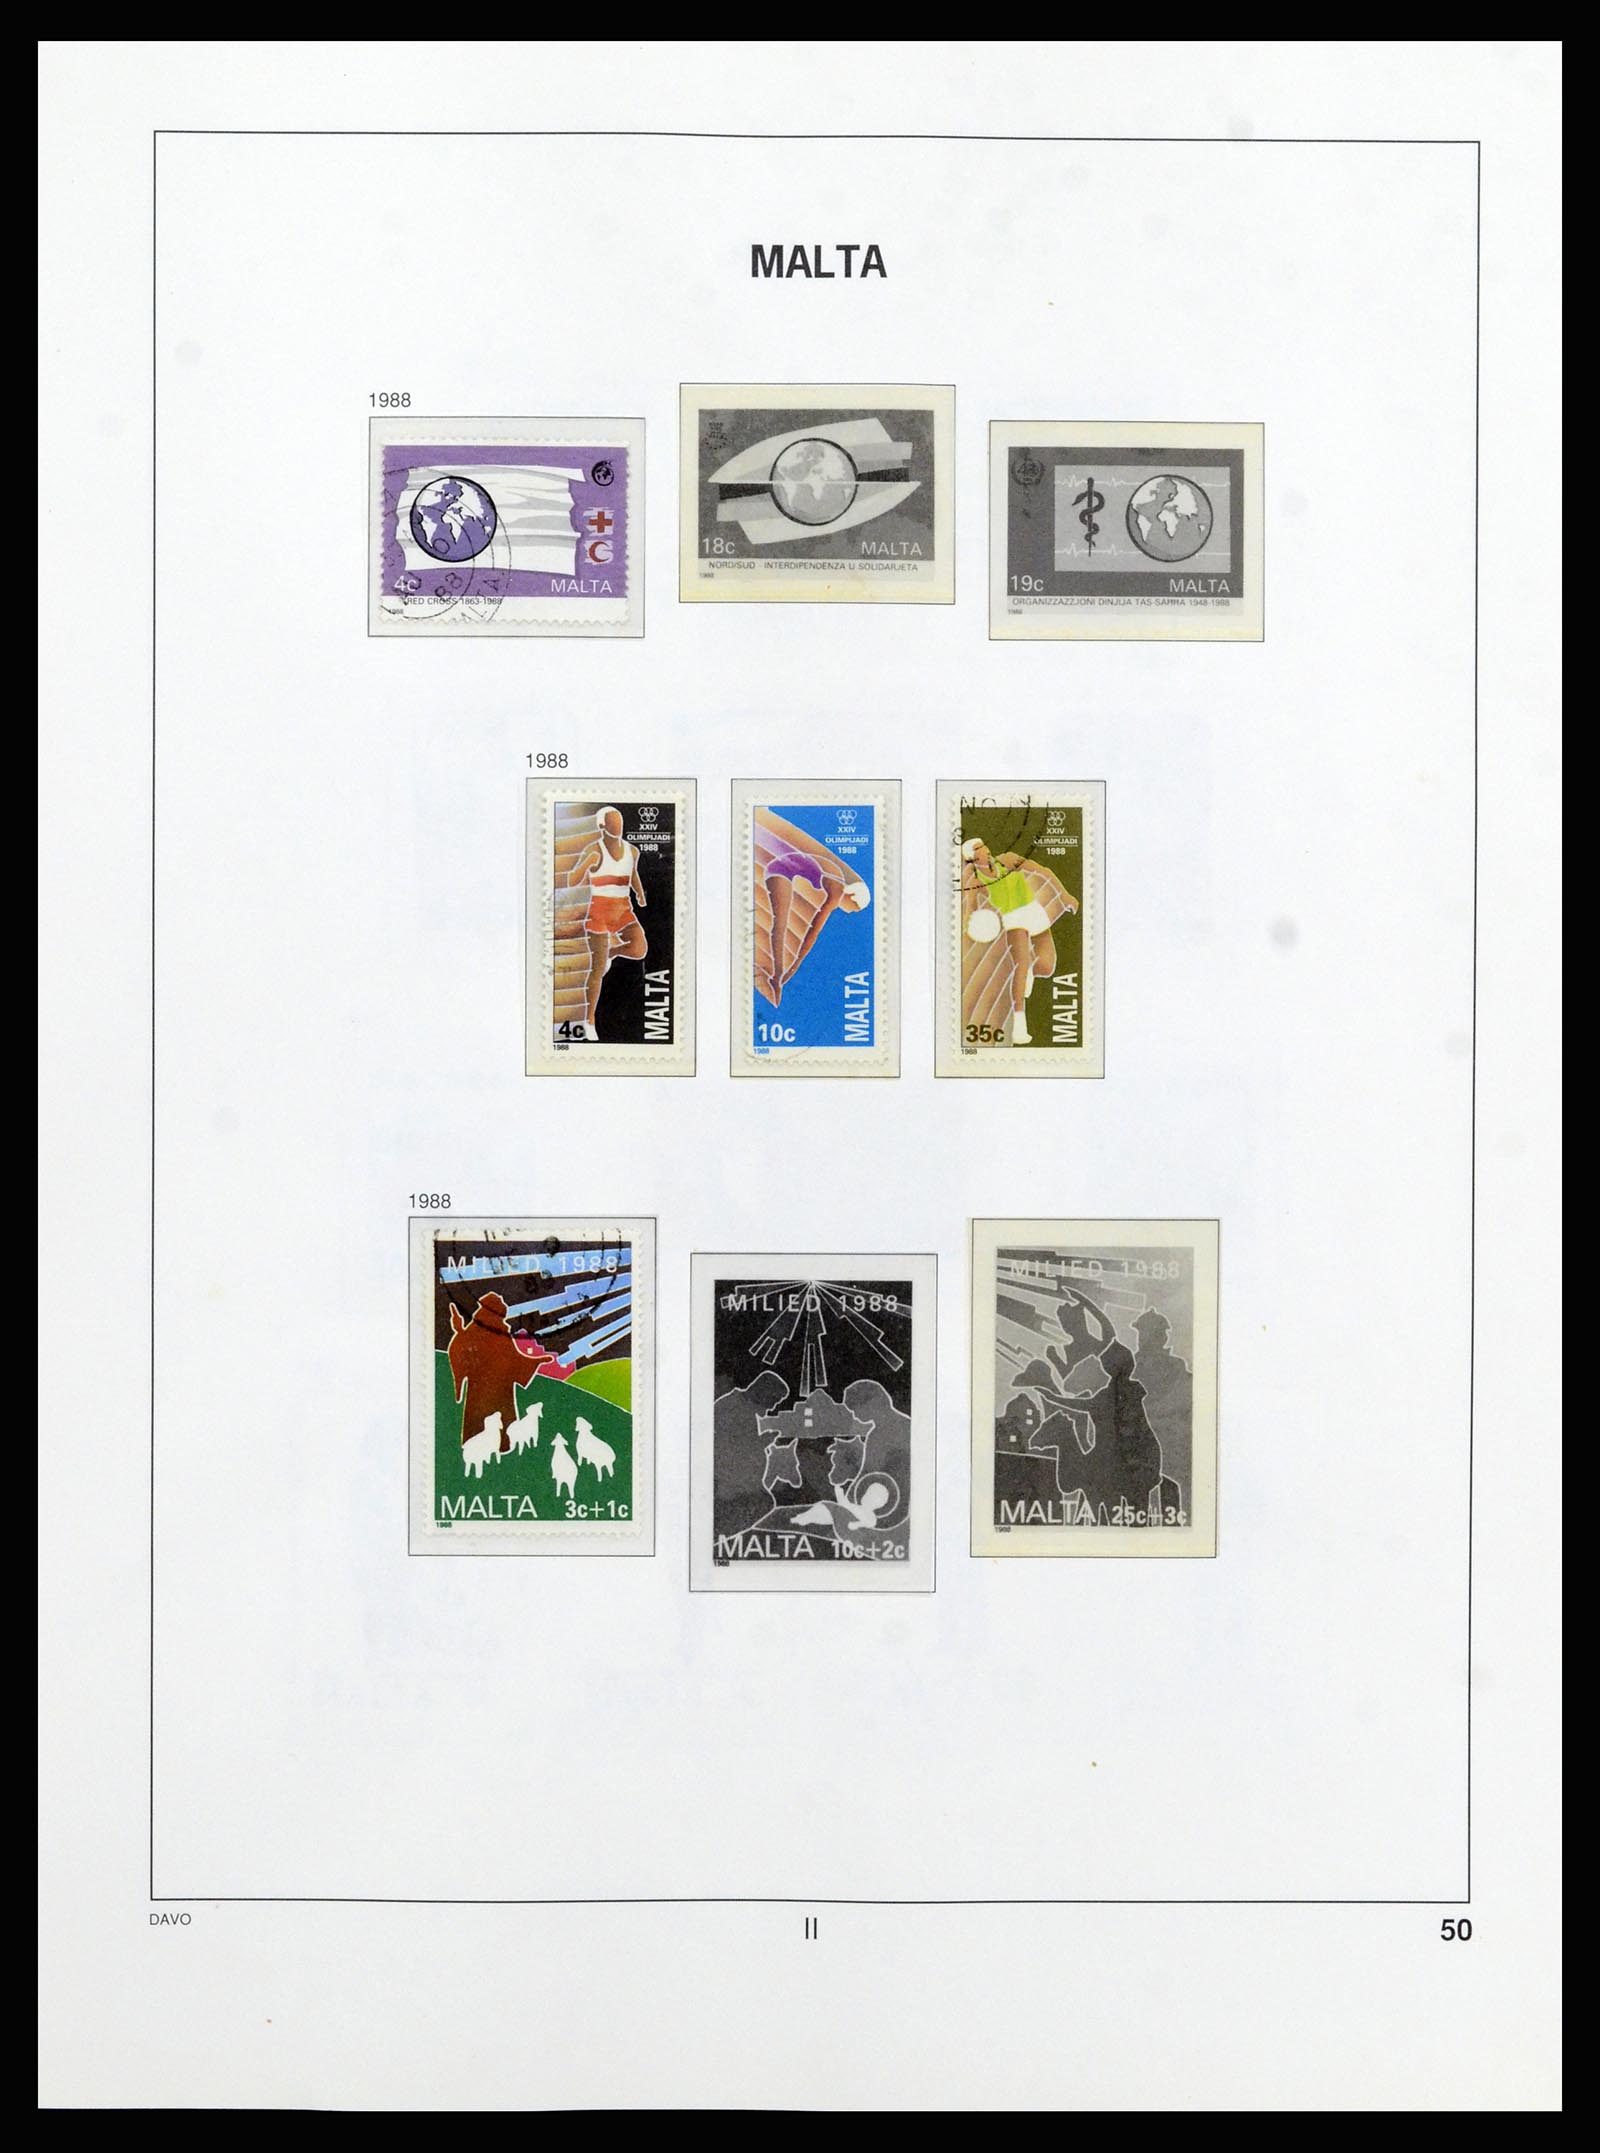 37212 074 - Stamp collection 37212 Malta 1863-1989.